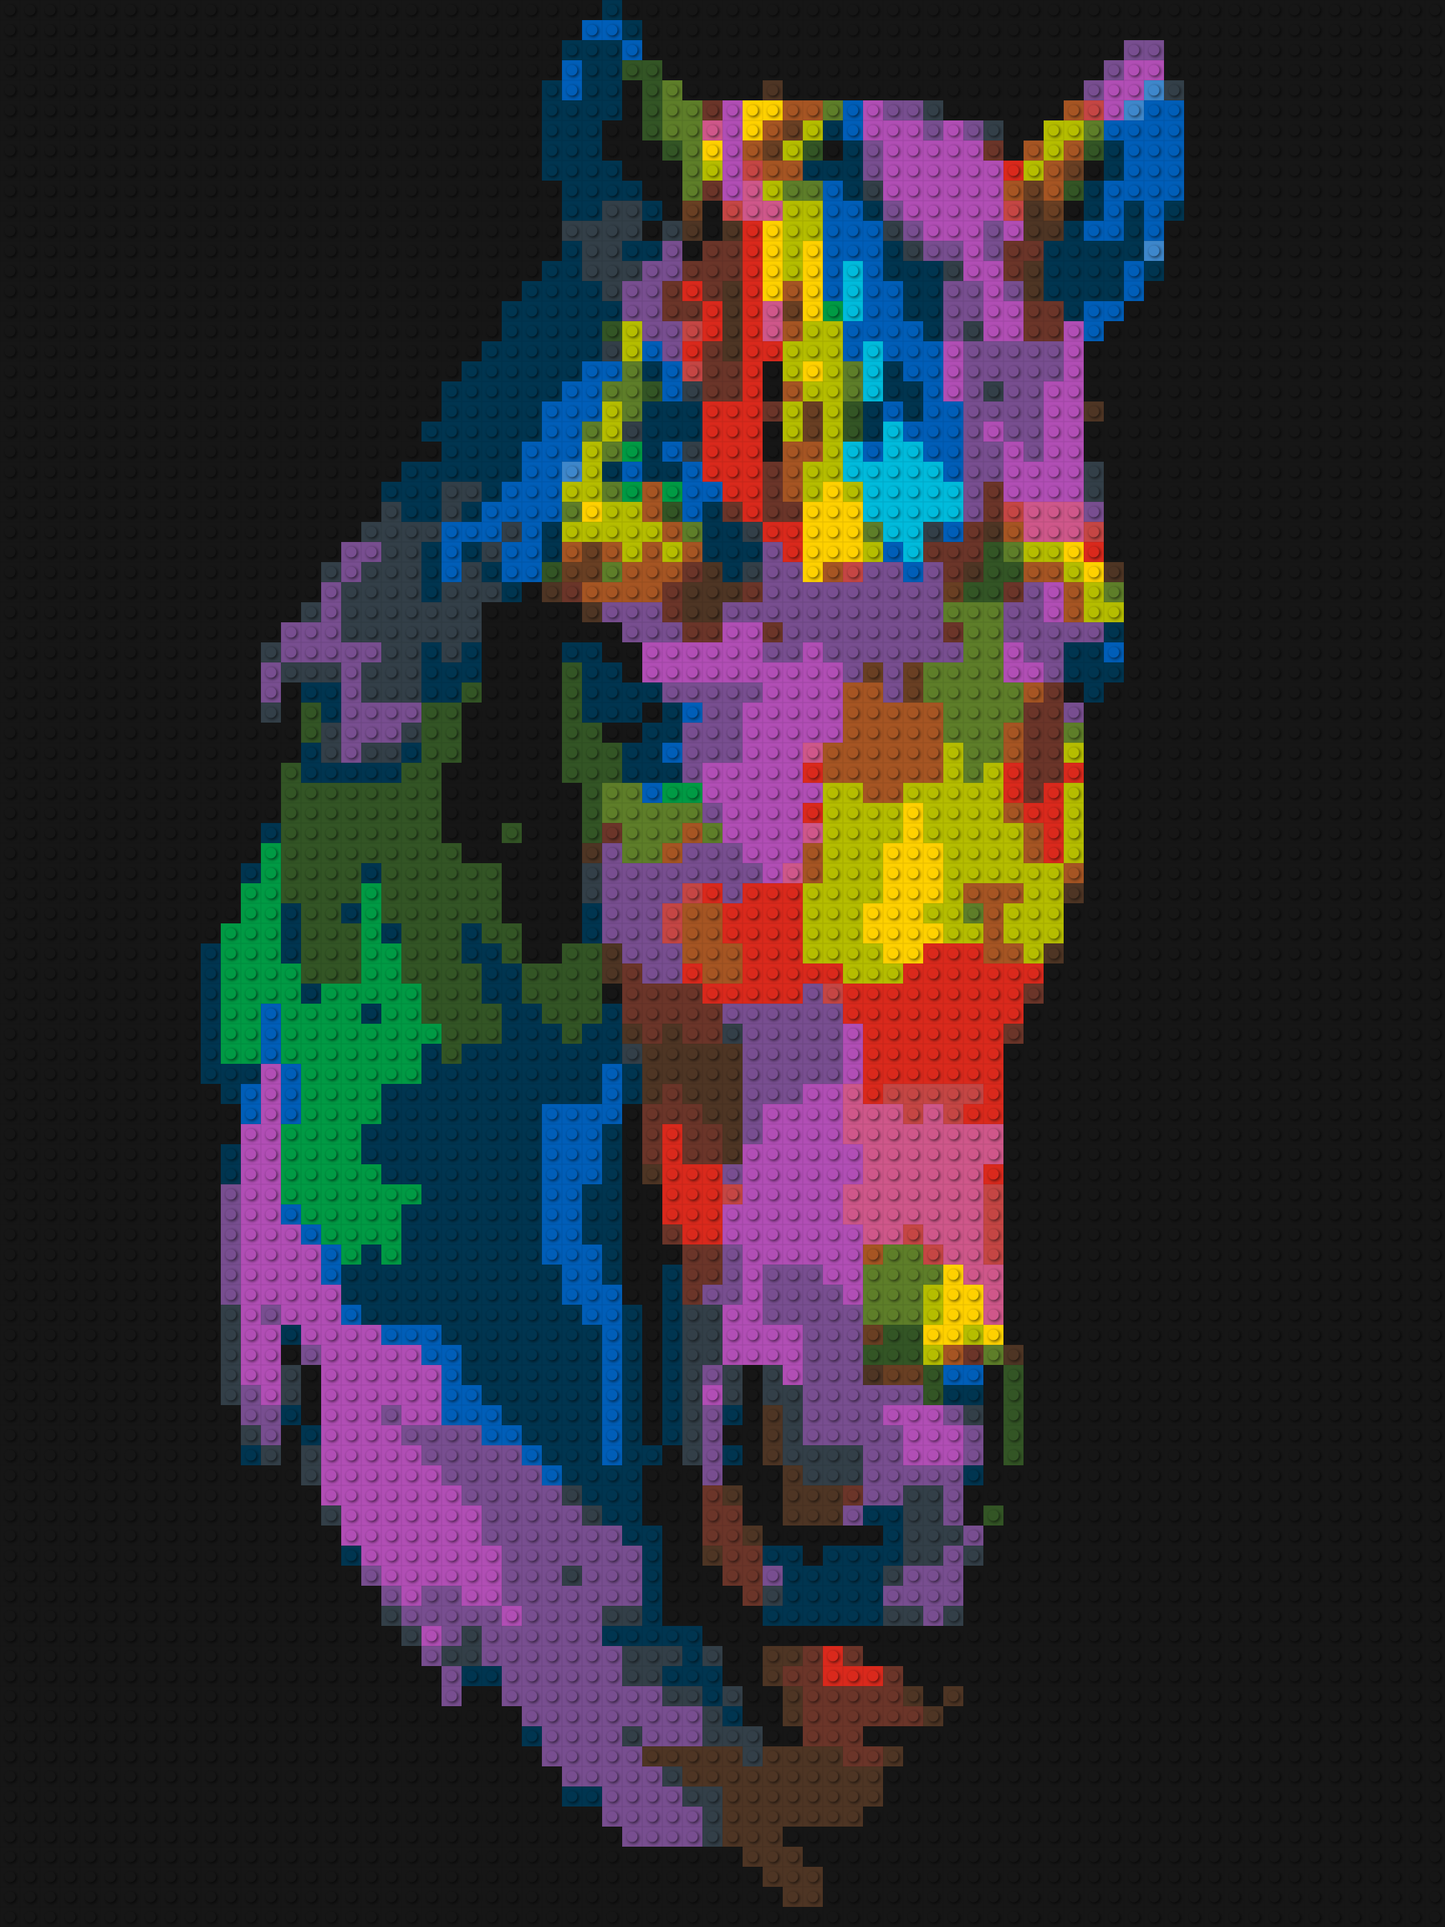 Horse Colourful Pop Art - Brick Art Mosaic Kit